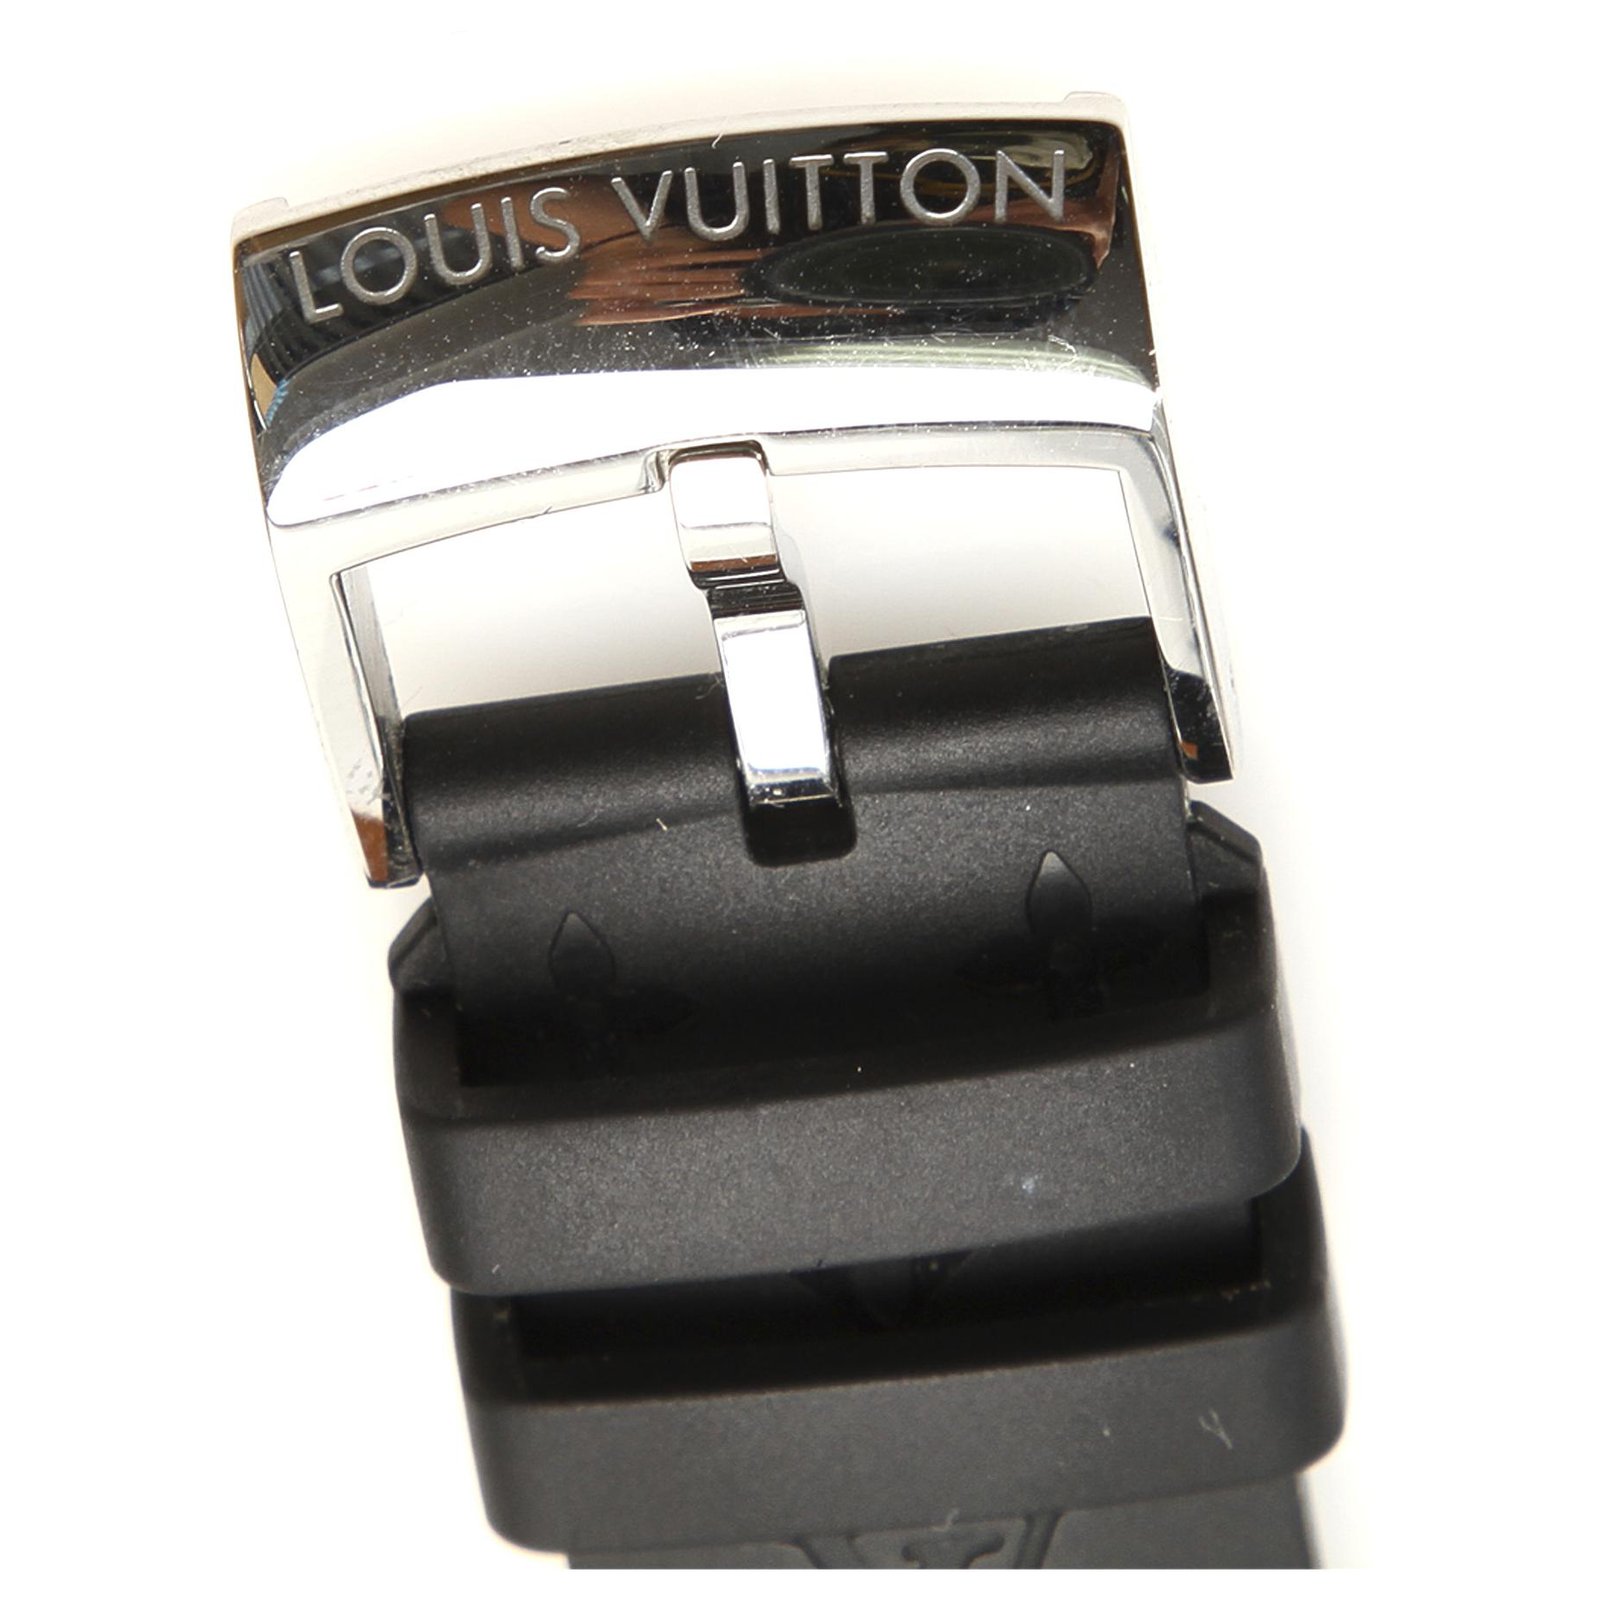 Relojes Louis vuitton Negro de en Acero - 30925268